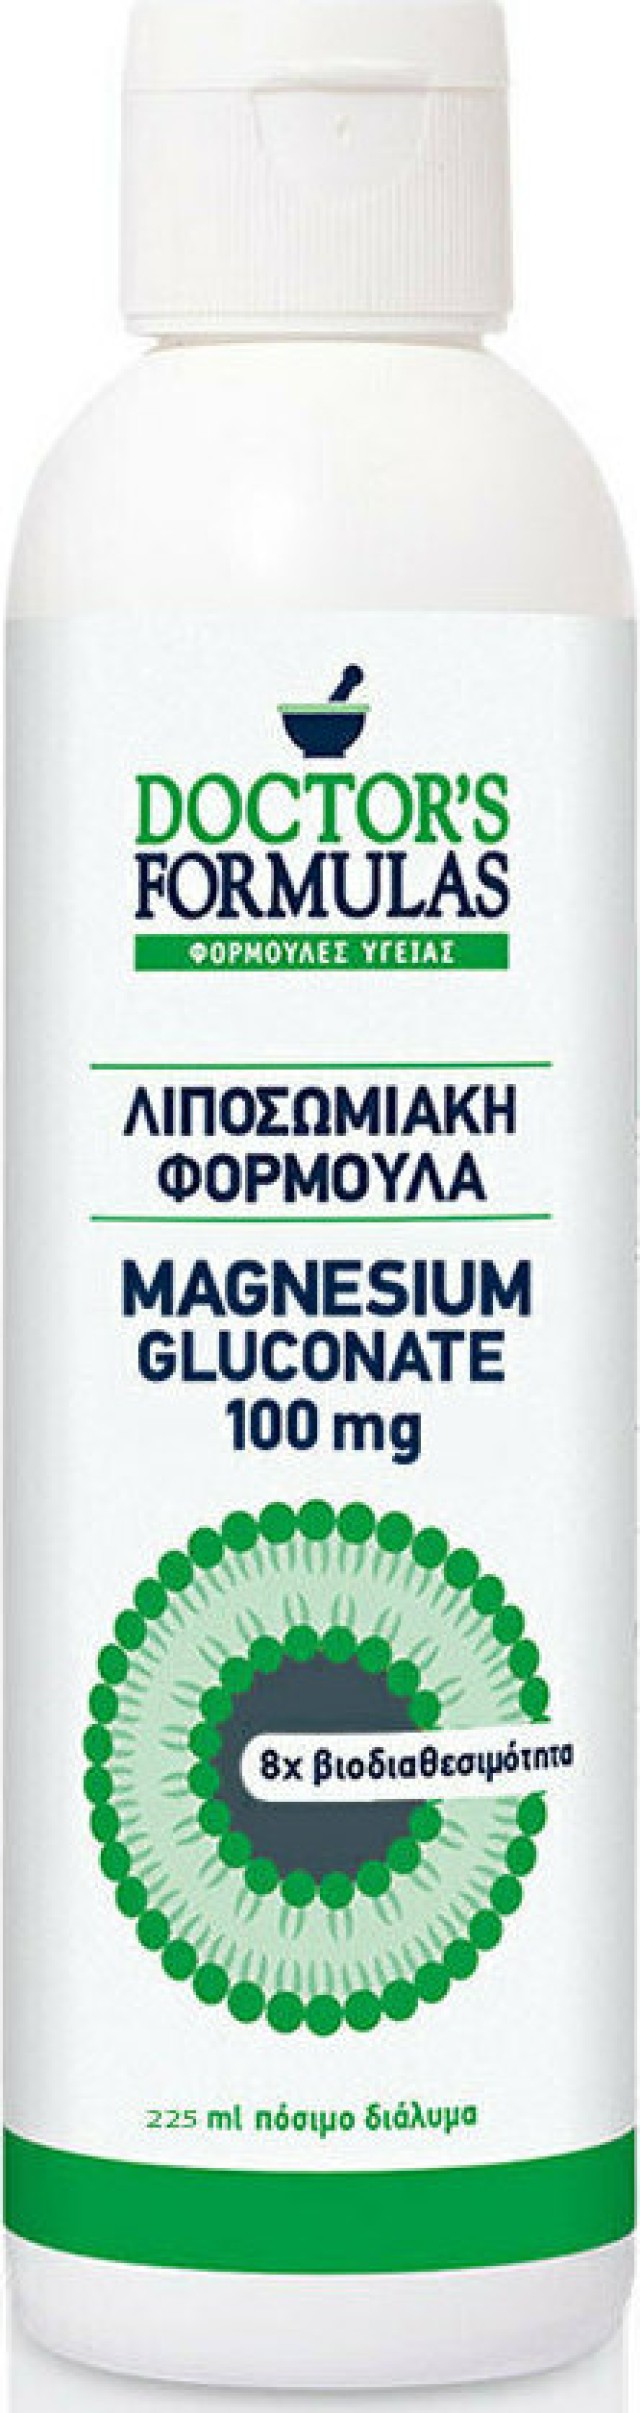 Doctors Formulas Magnesium Gluconate 100mg Λιποσωμιακή Φόρμουλα 225ml